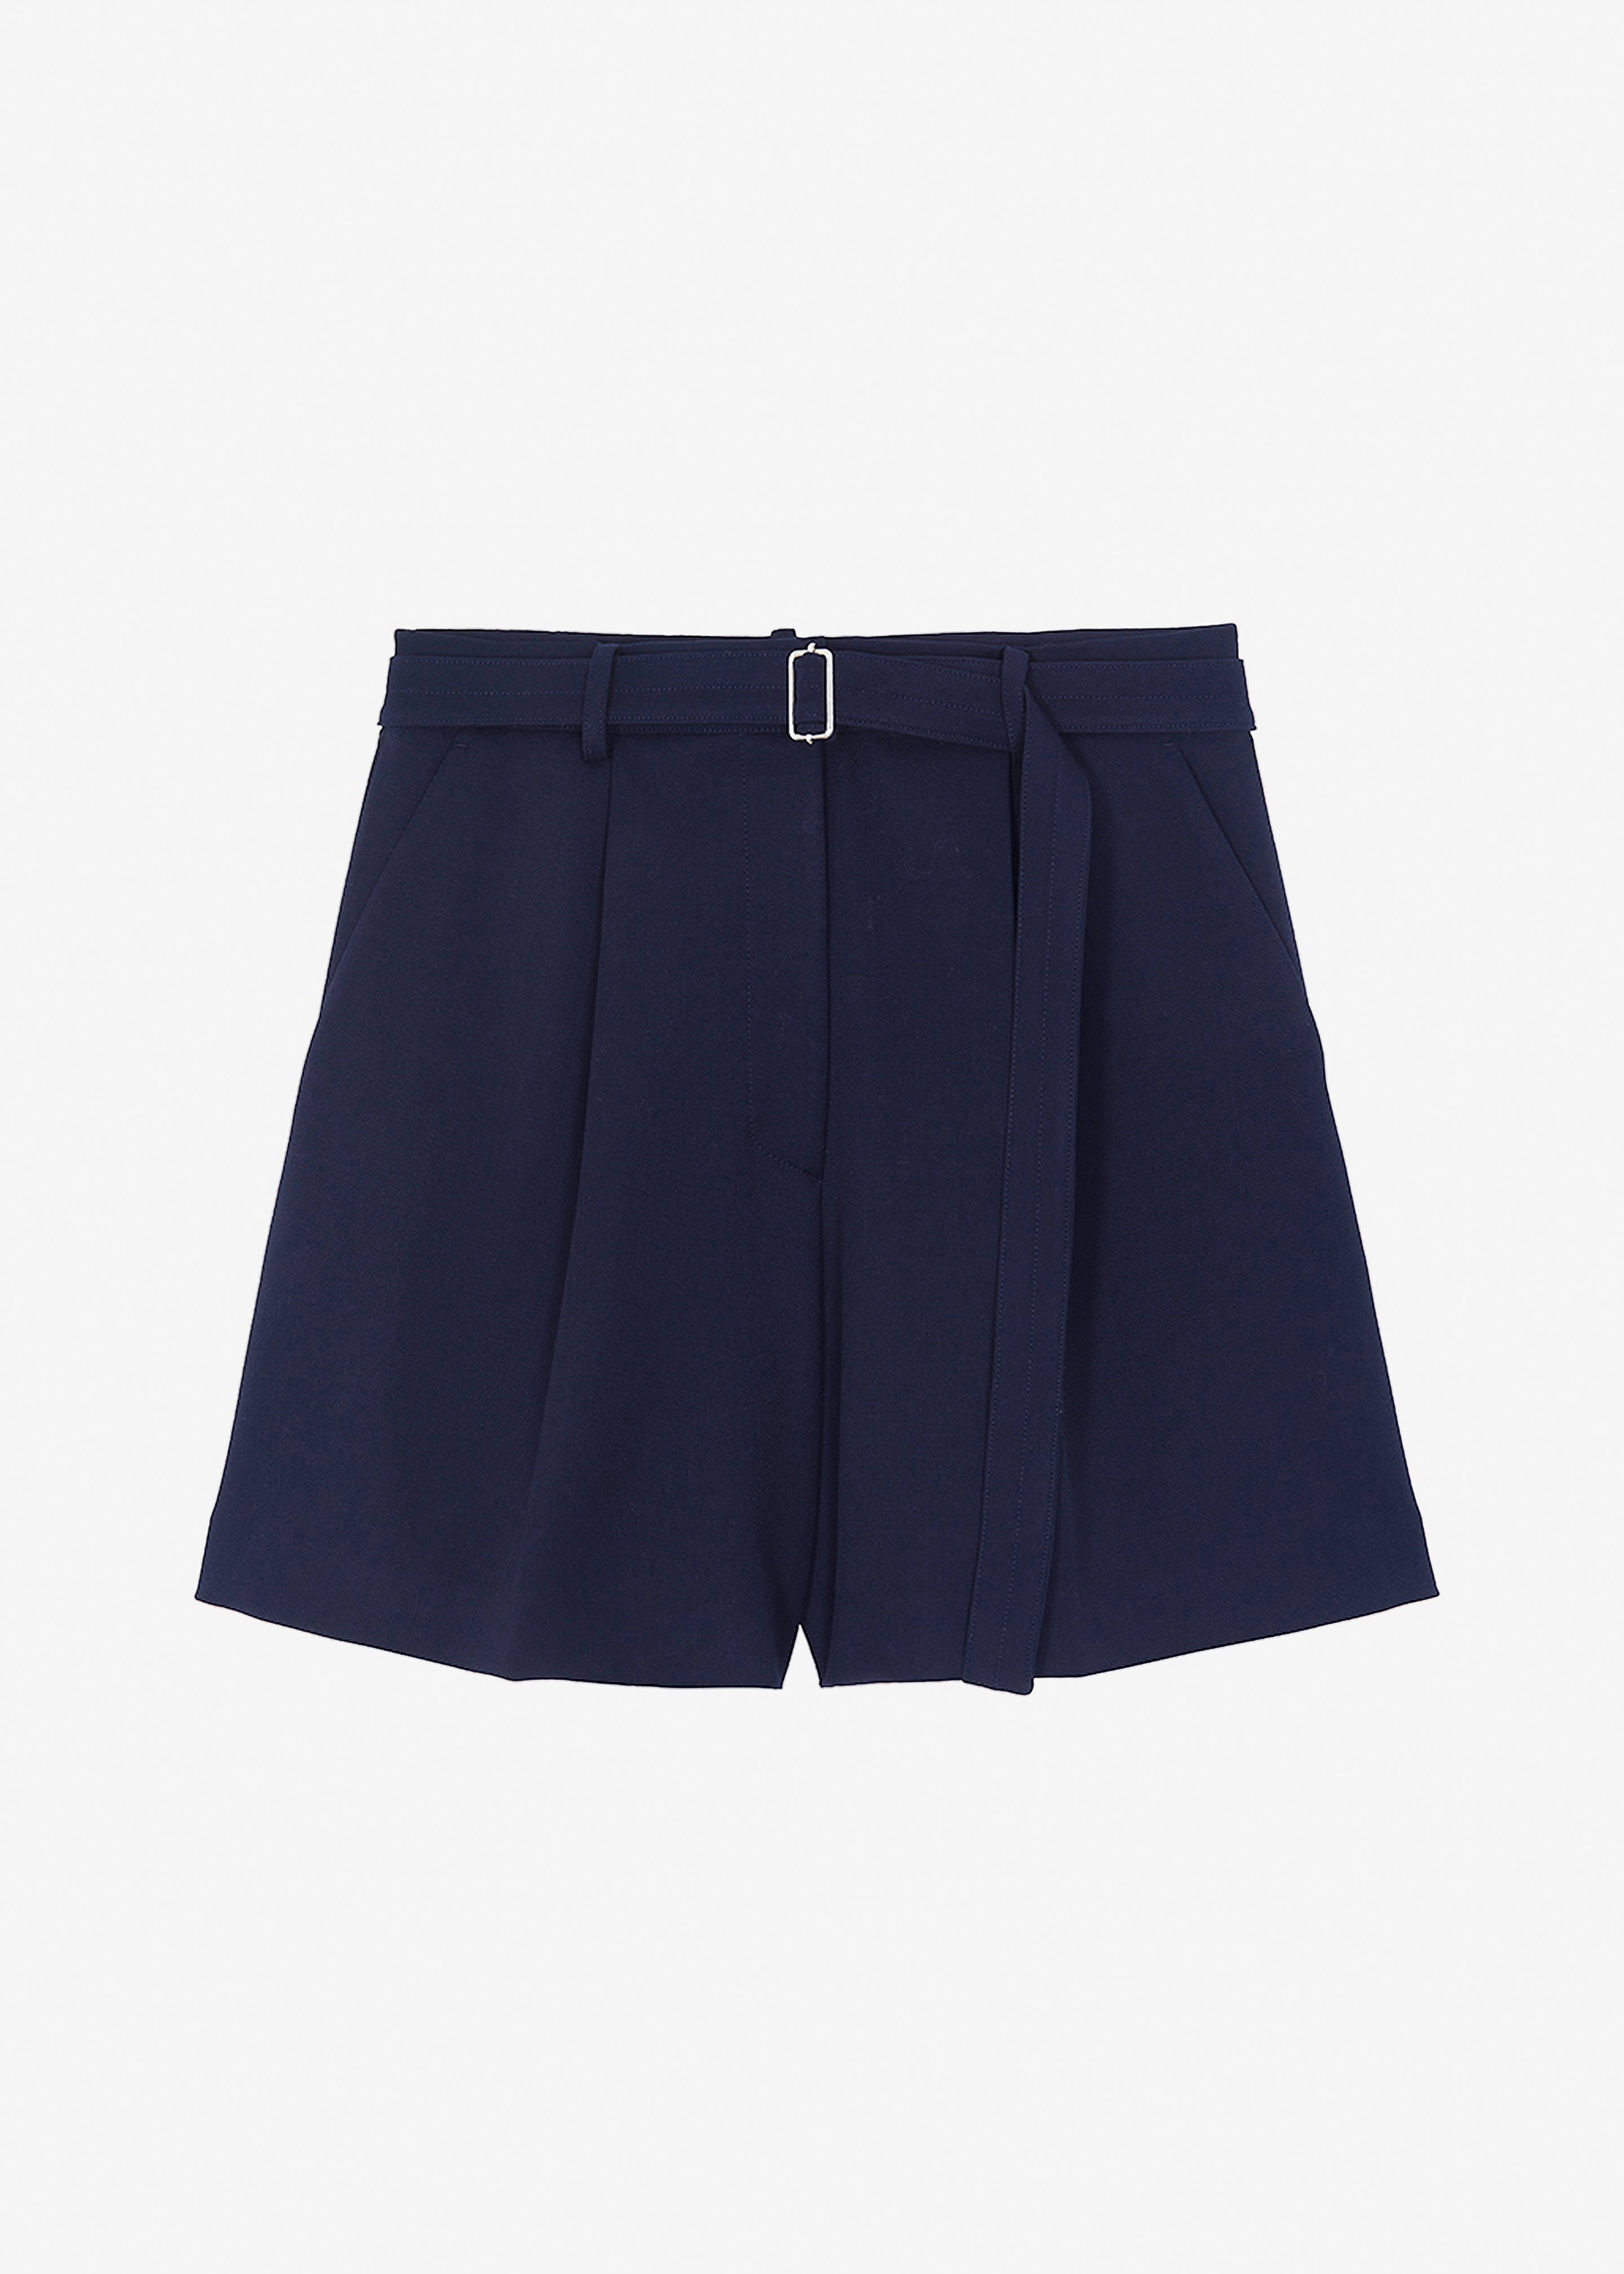 Avalon Belted Shorts - Navy - 12